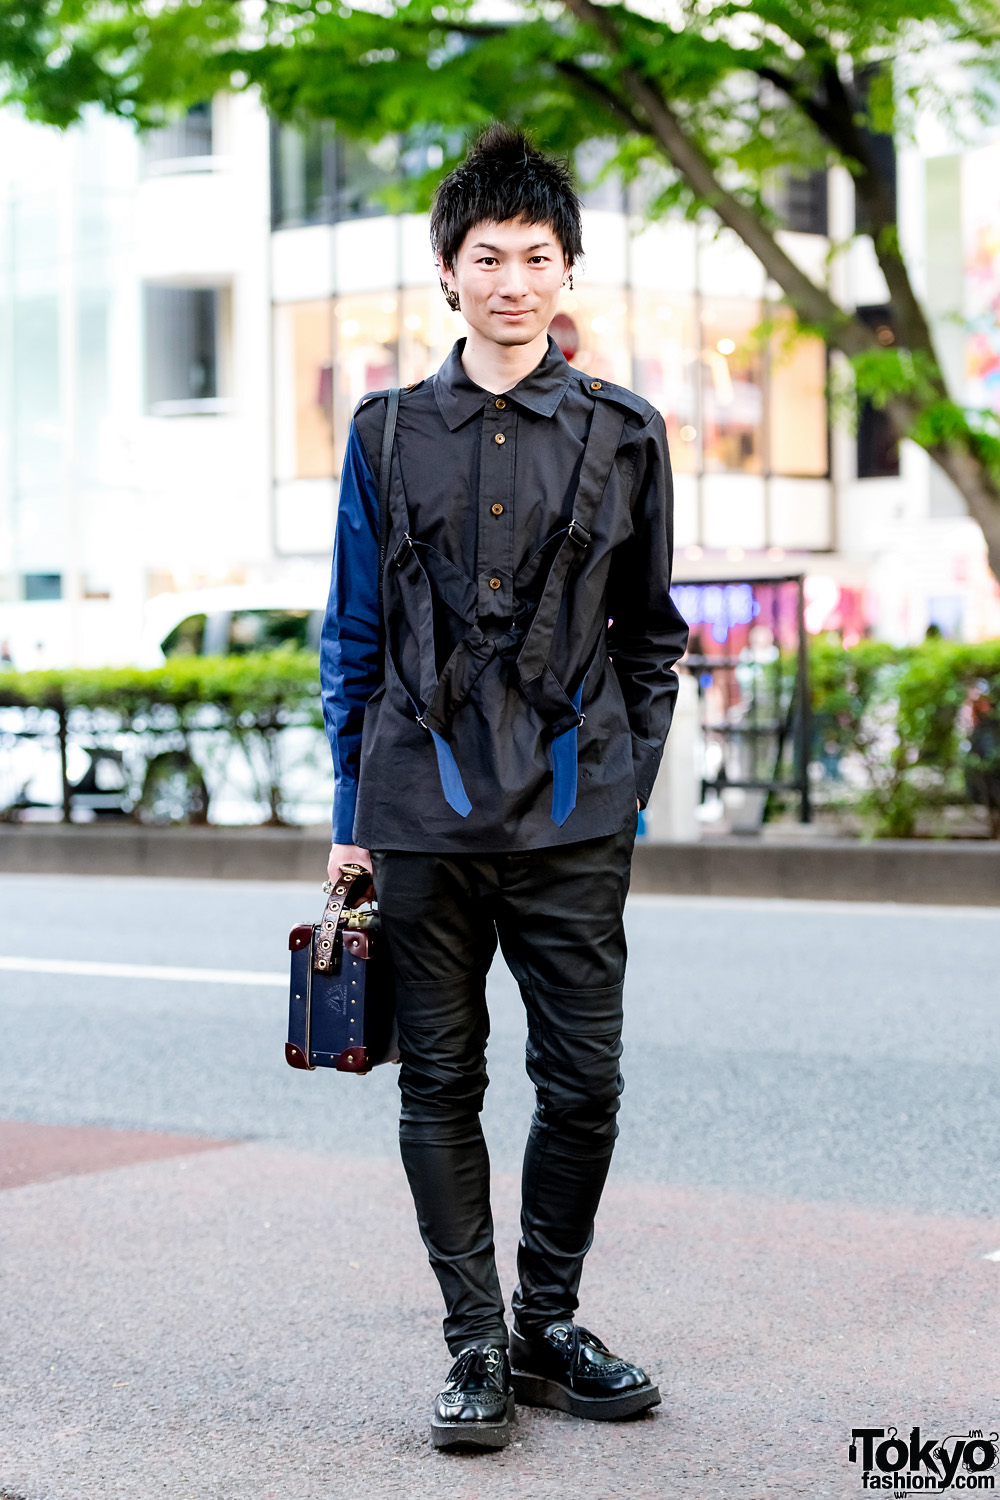 Black Harajuku Street Style w/ Vivienne Westwood Harness Strap Shirt, Skinny Pants, Suitcase Bag & George Cox Creepers